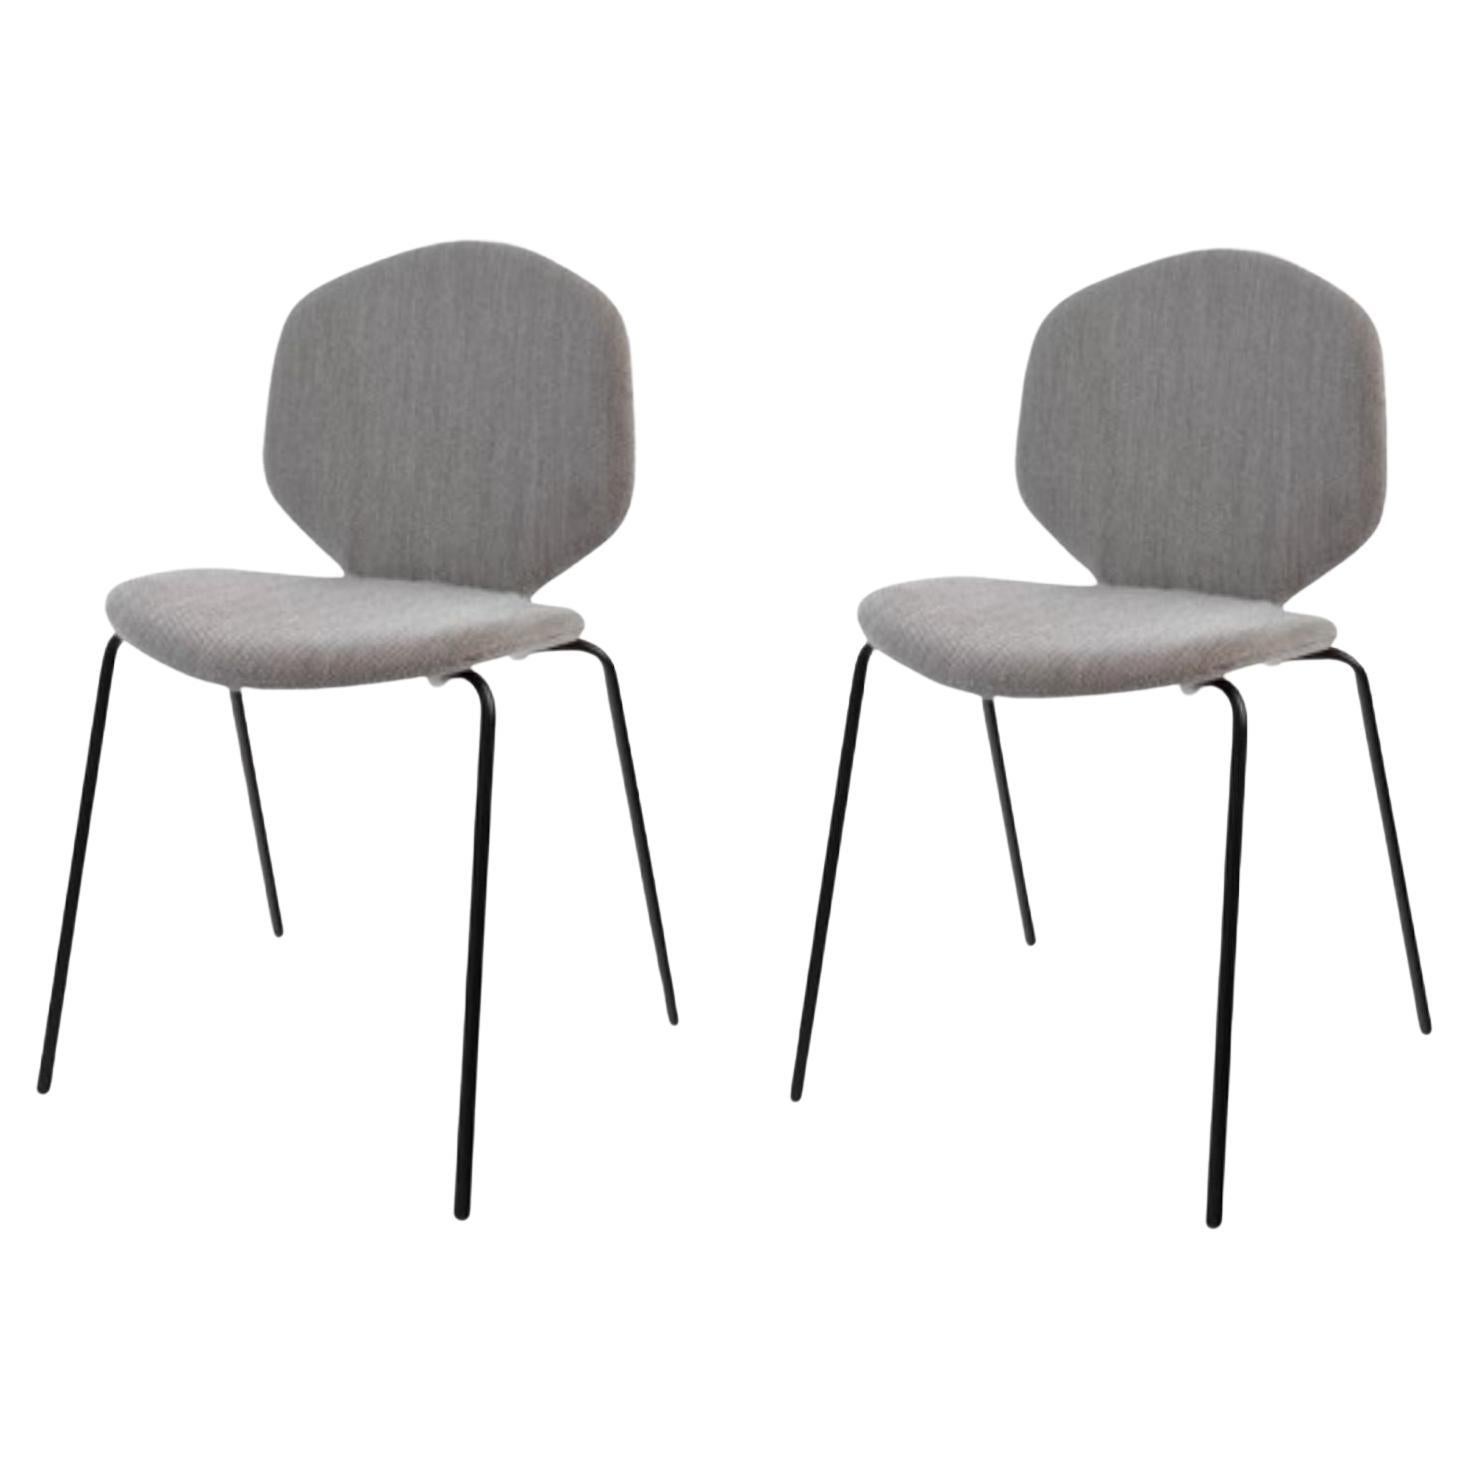 Set of 2 Fabric LouLou Chairs by Shin Azumi